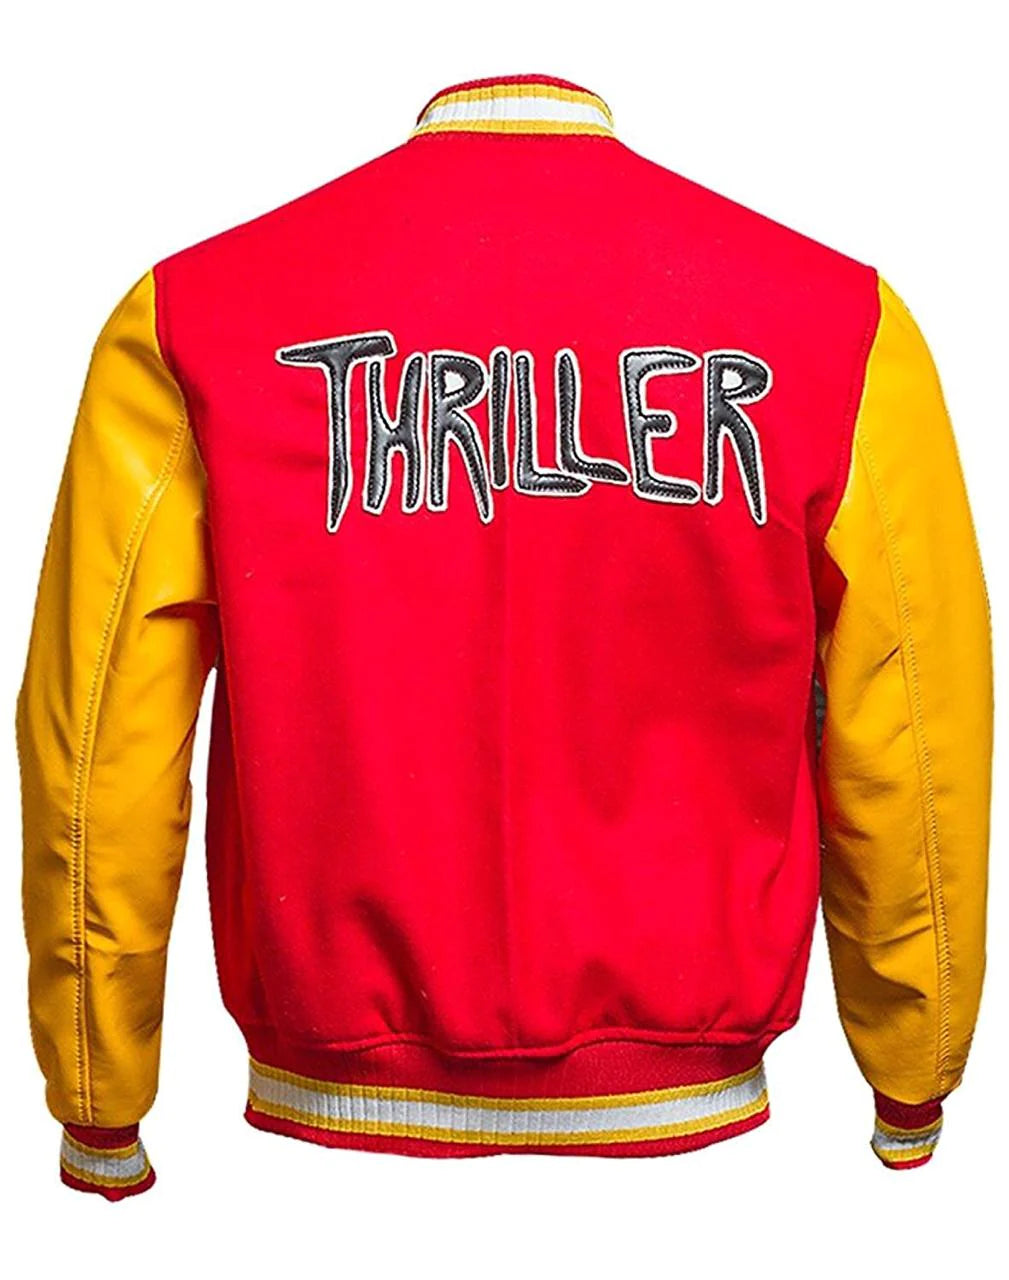 Michael Jackson Thriller Varsity Wool Jacket